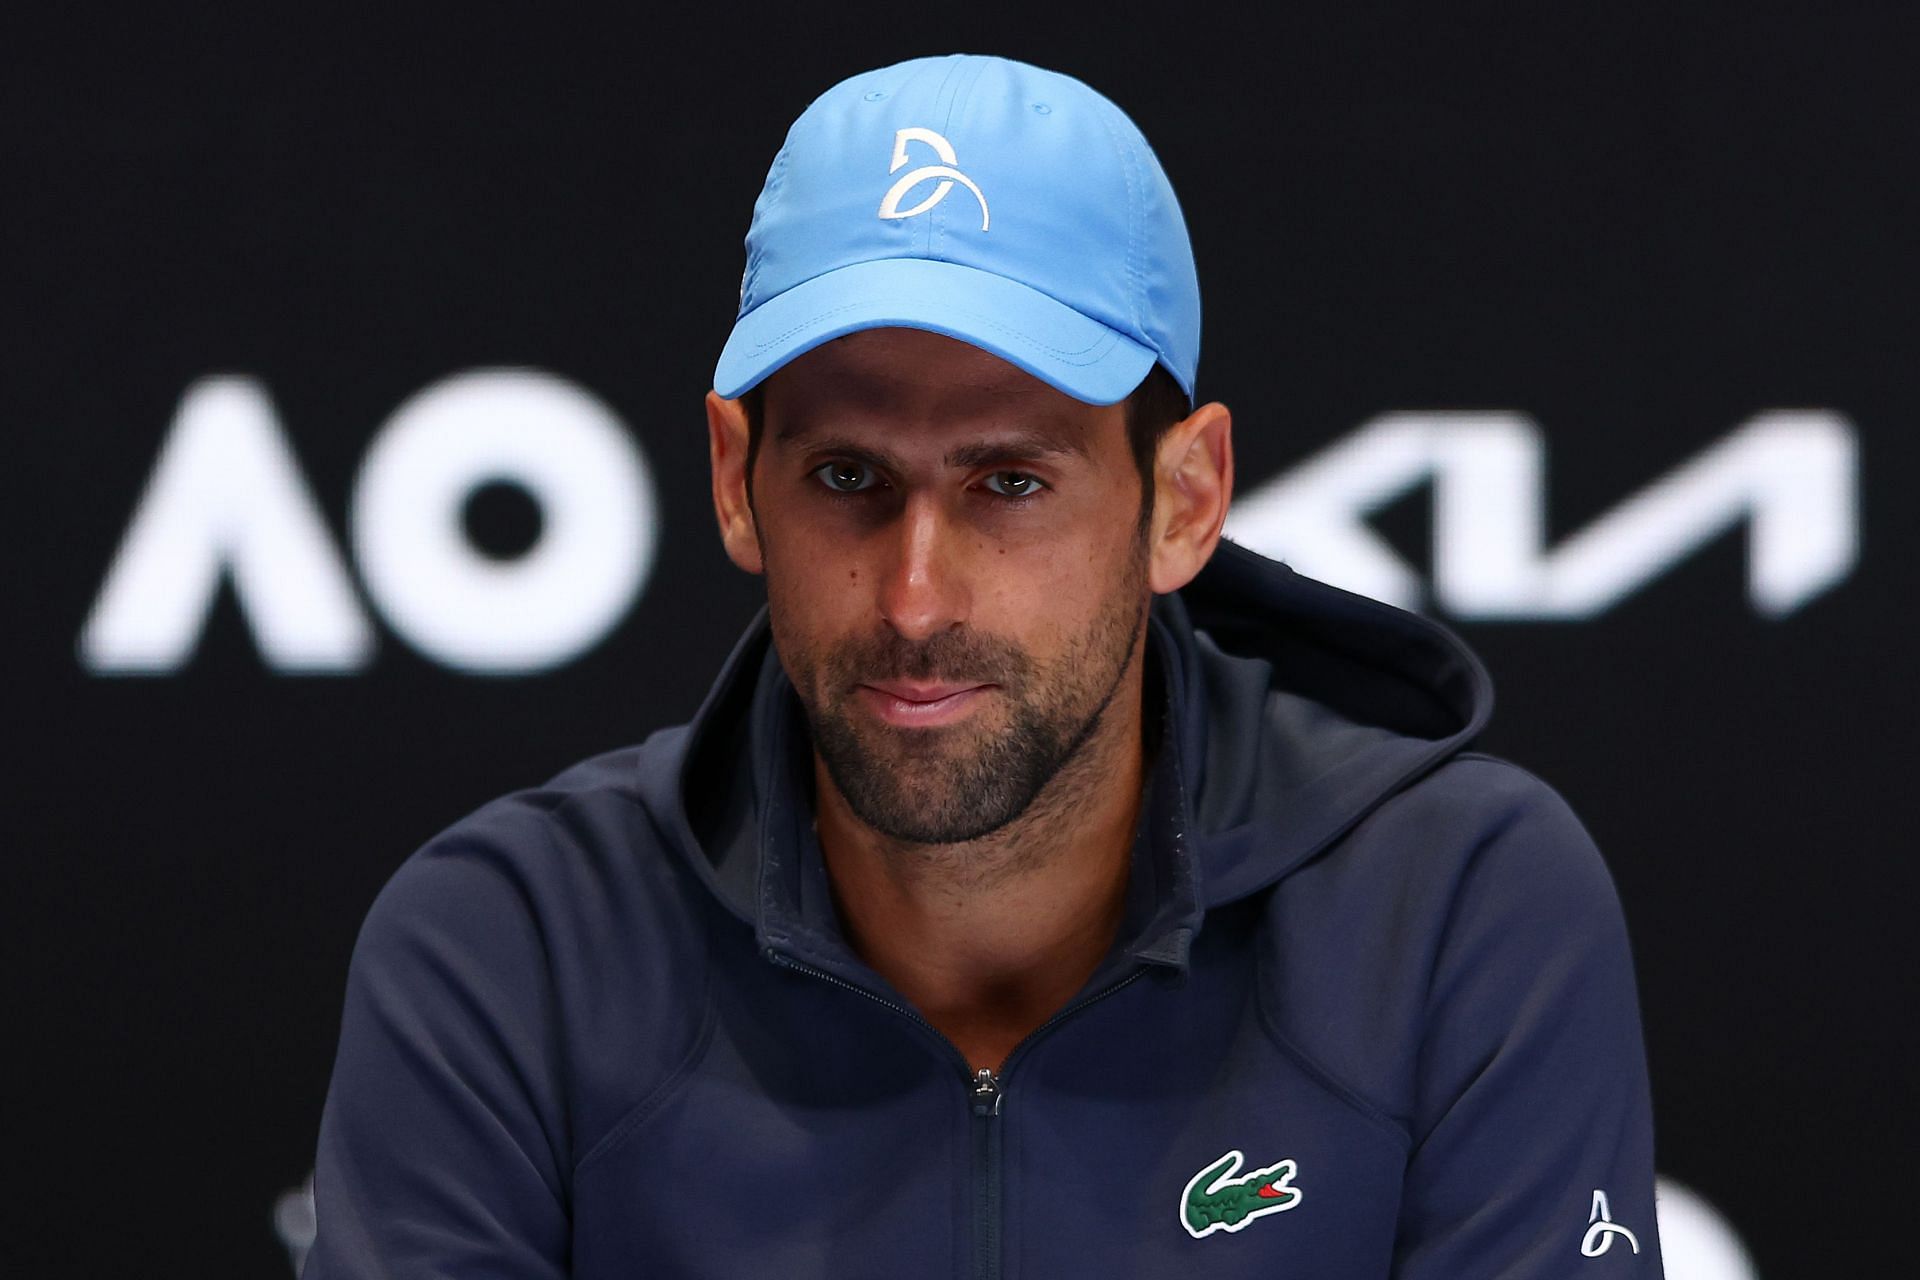 Novak Djokovic at the 2023 Australian Open